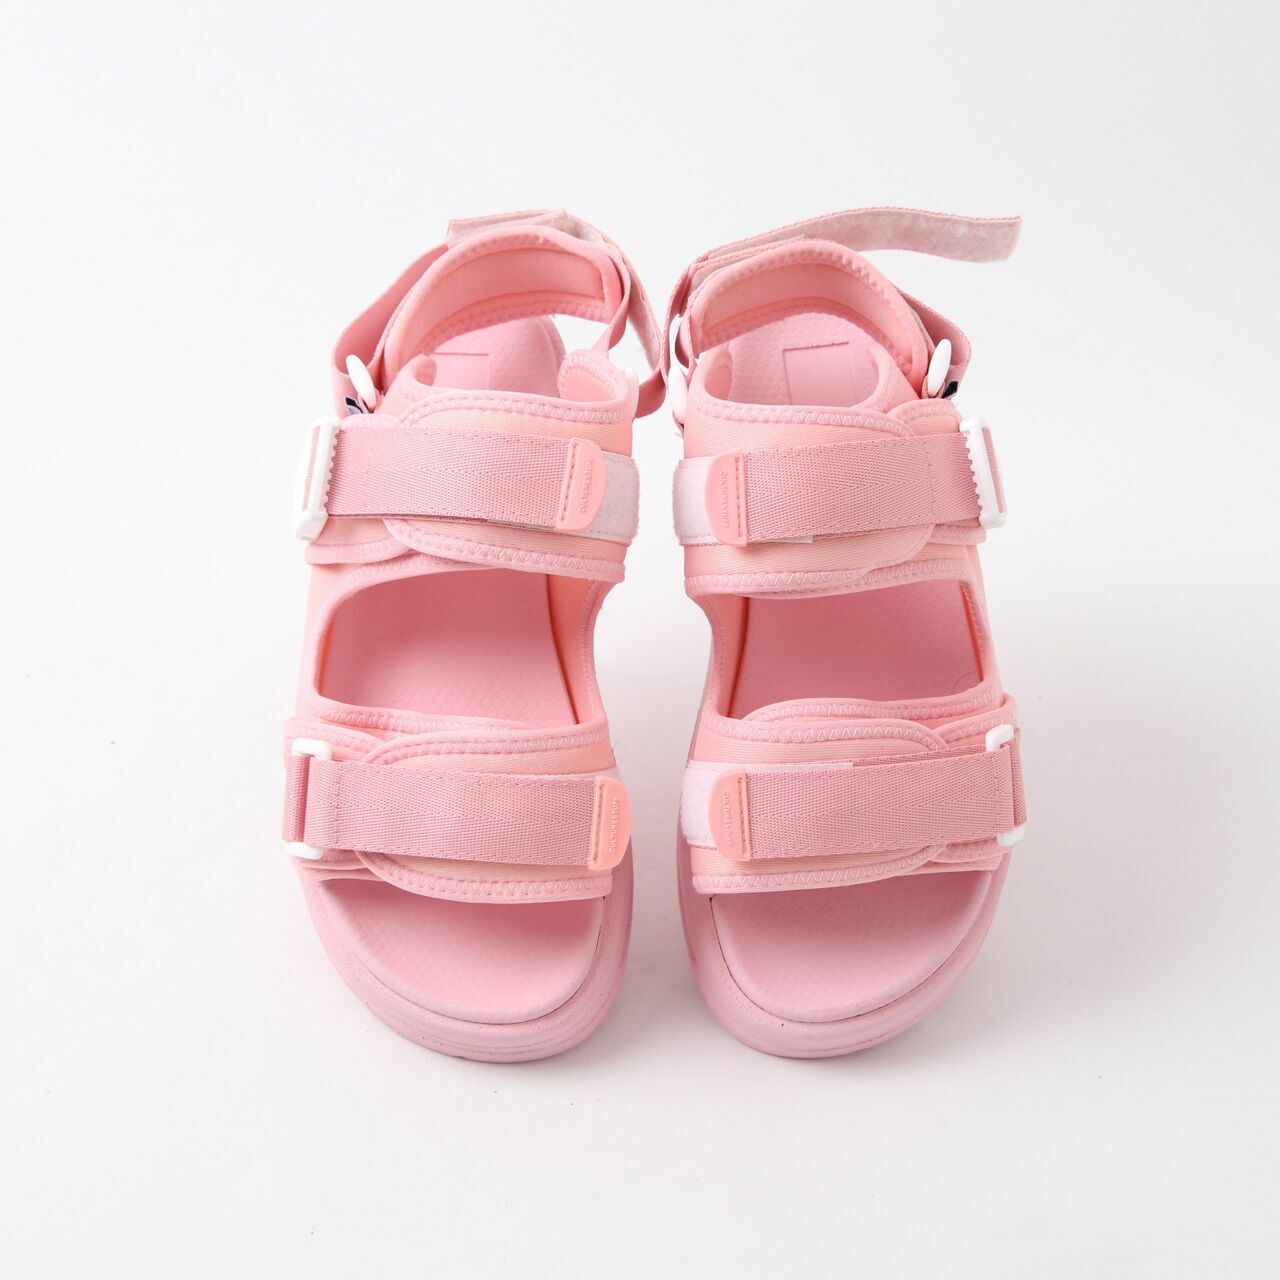 Culture Stuff Pink Sandals